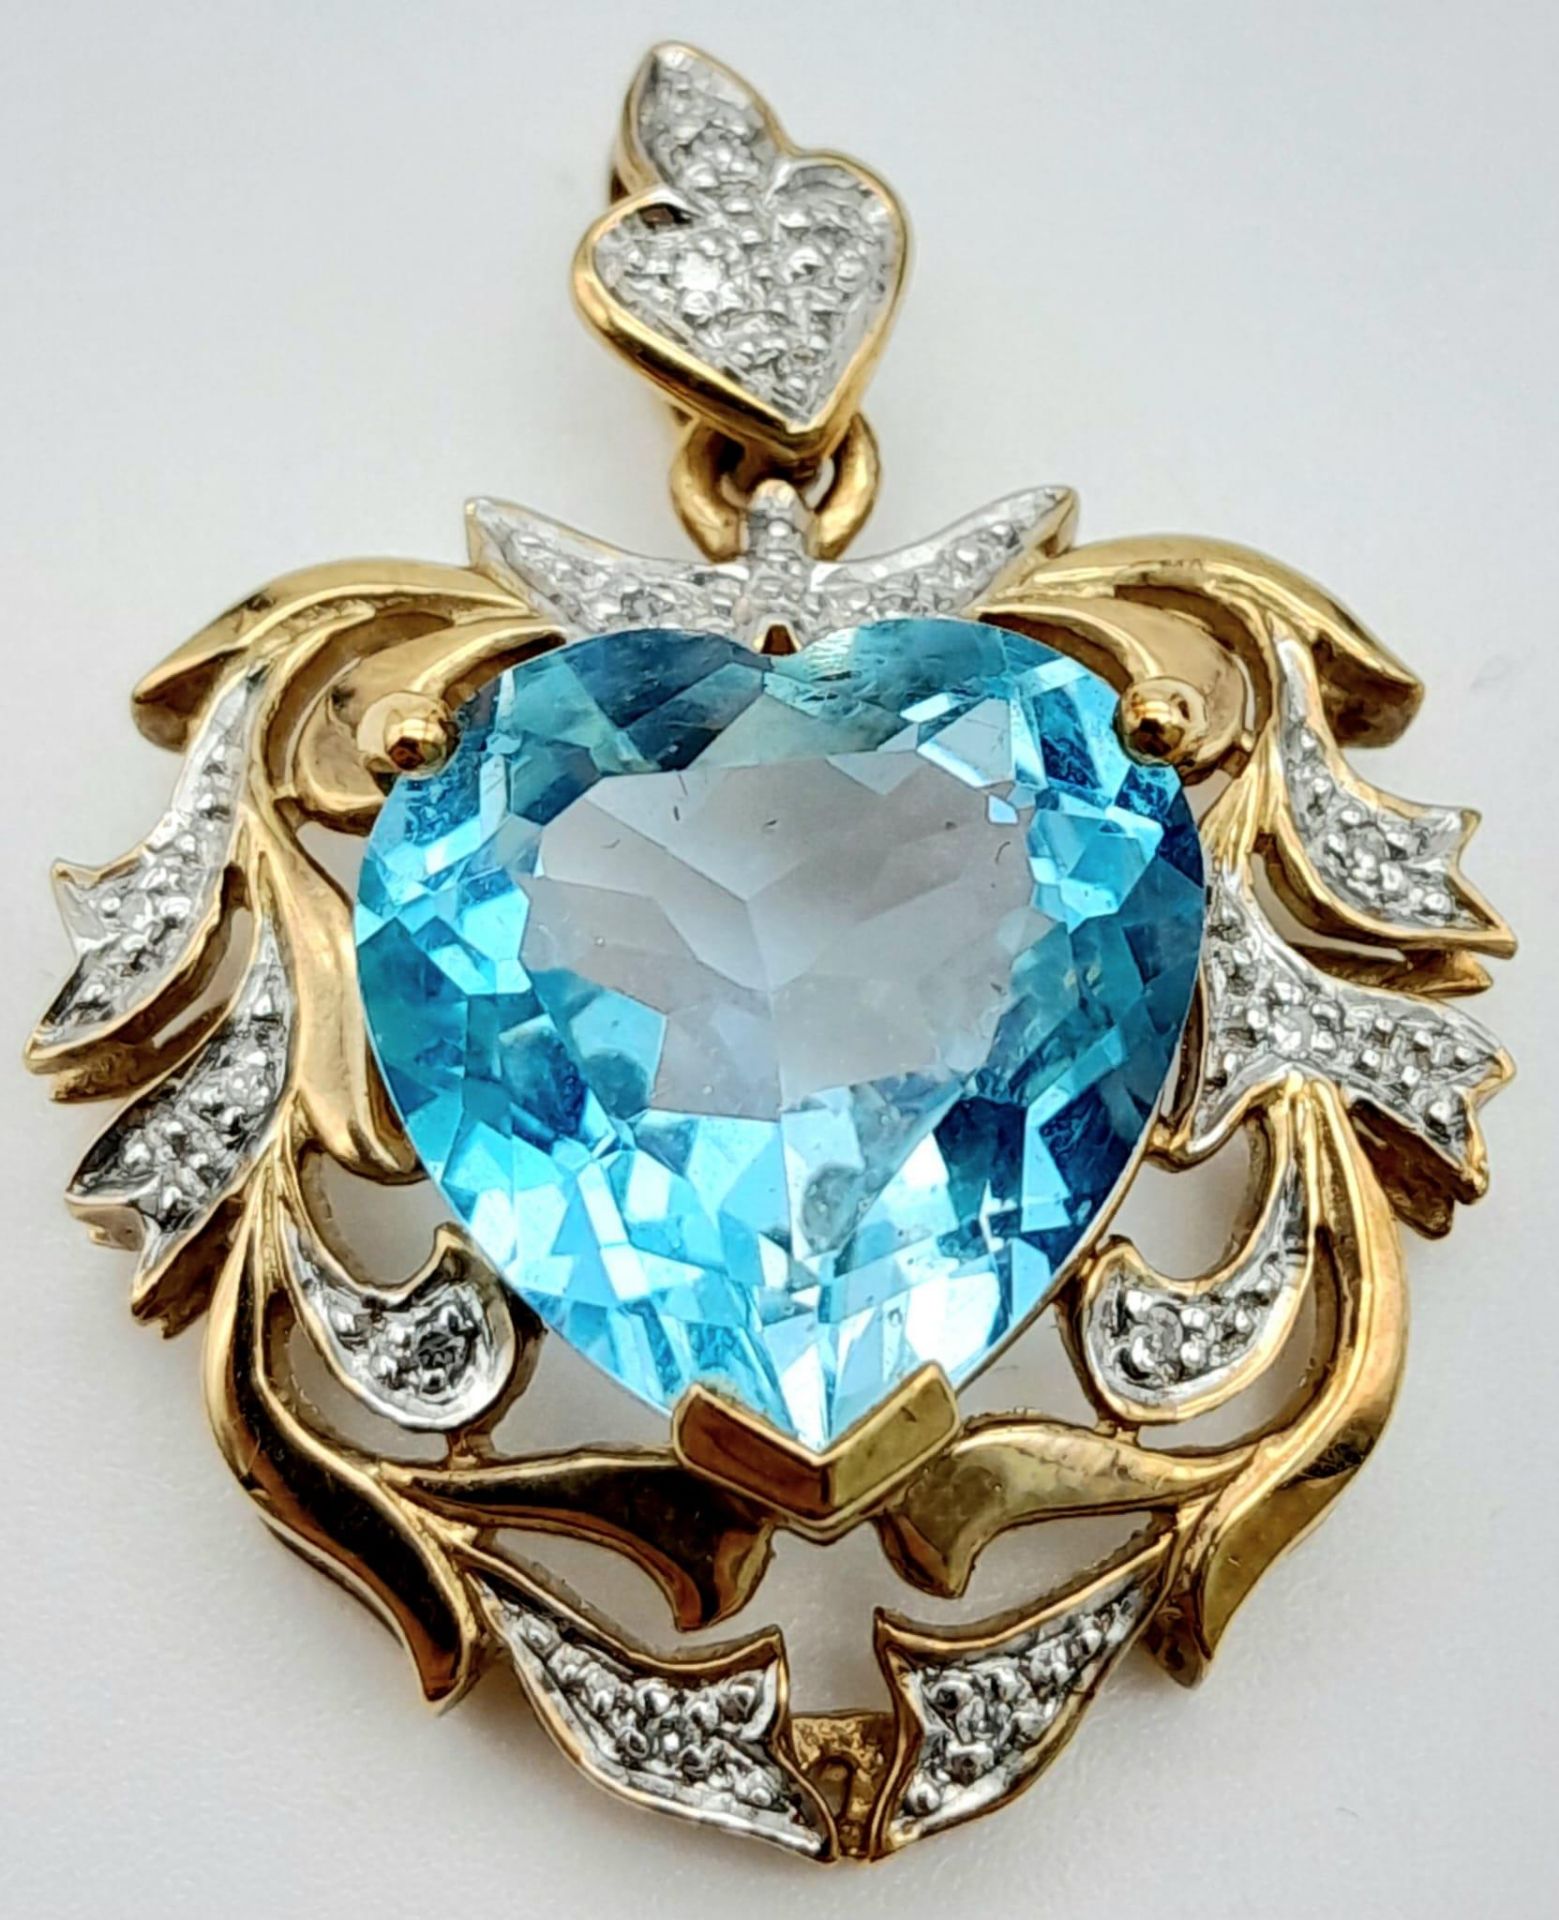 A Sumptuous Antique Style 9K Yellow Gold, Aquamarine and Diamond Pendant. Heart-shape cut aquamarine